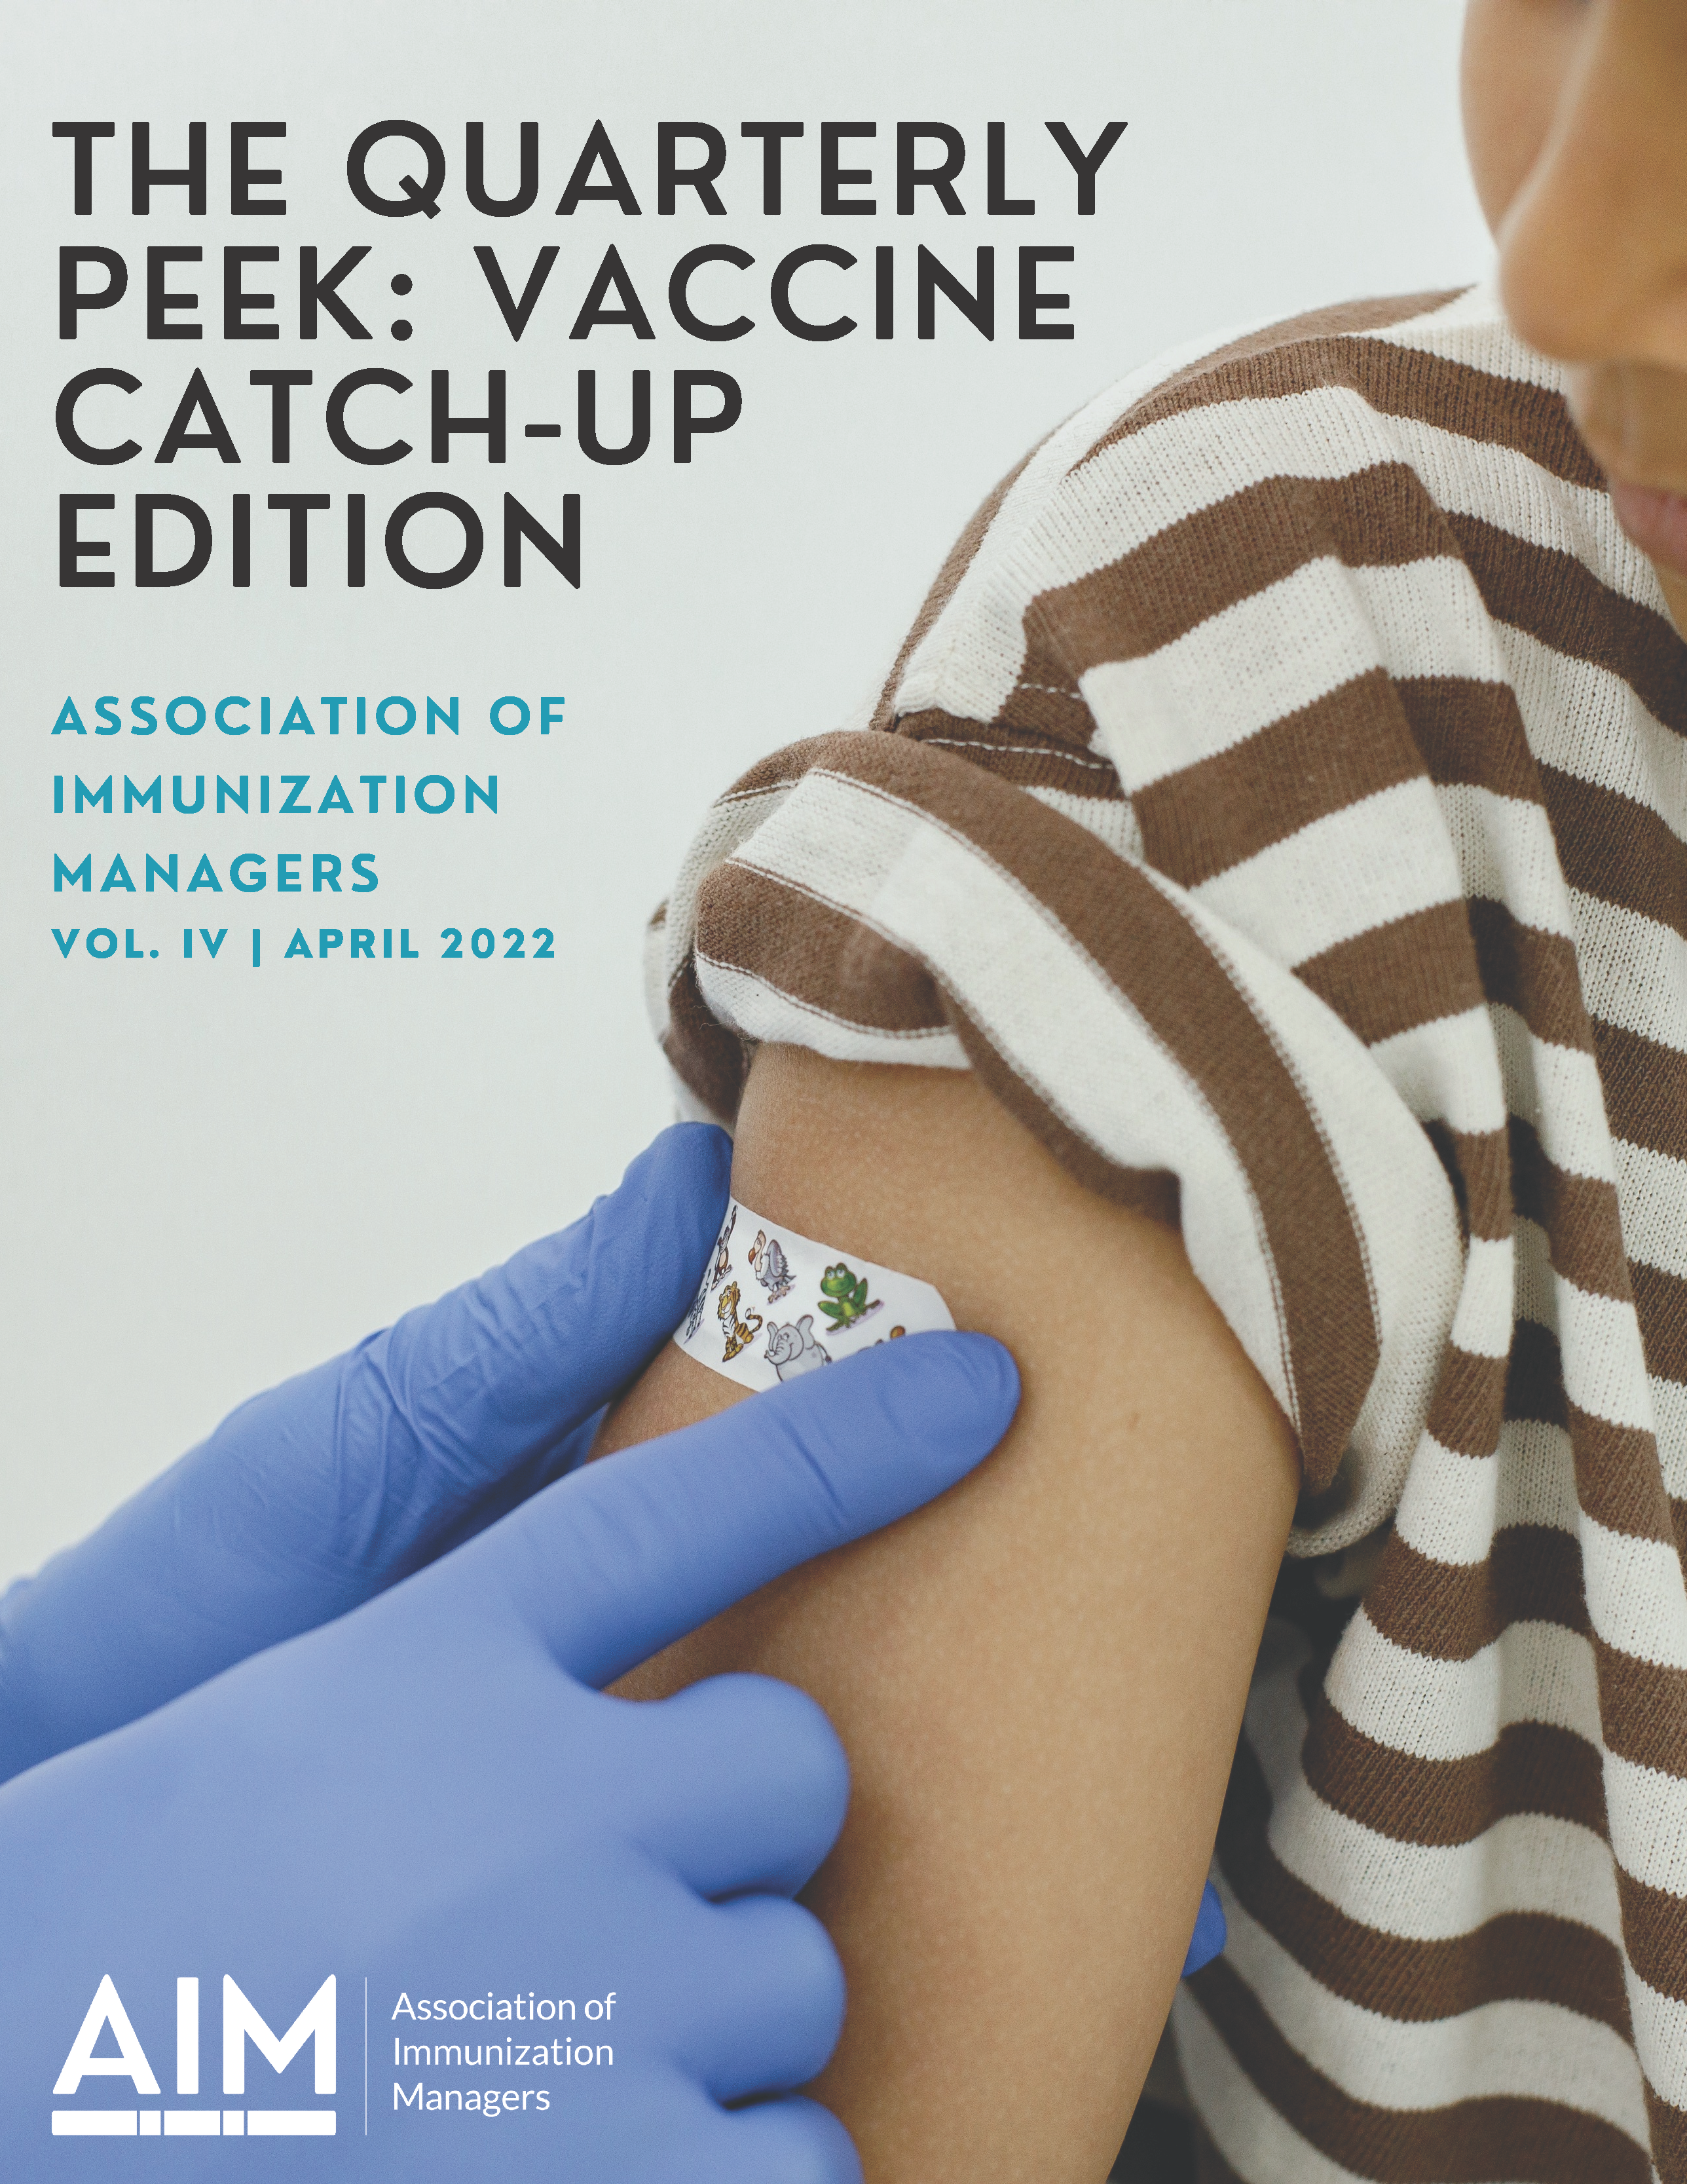 The quarterly peek: vaccine catch up edition